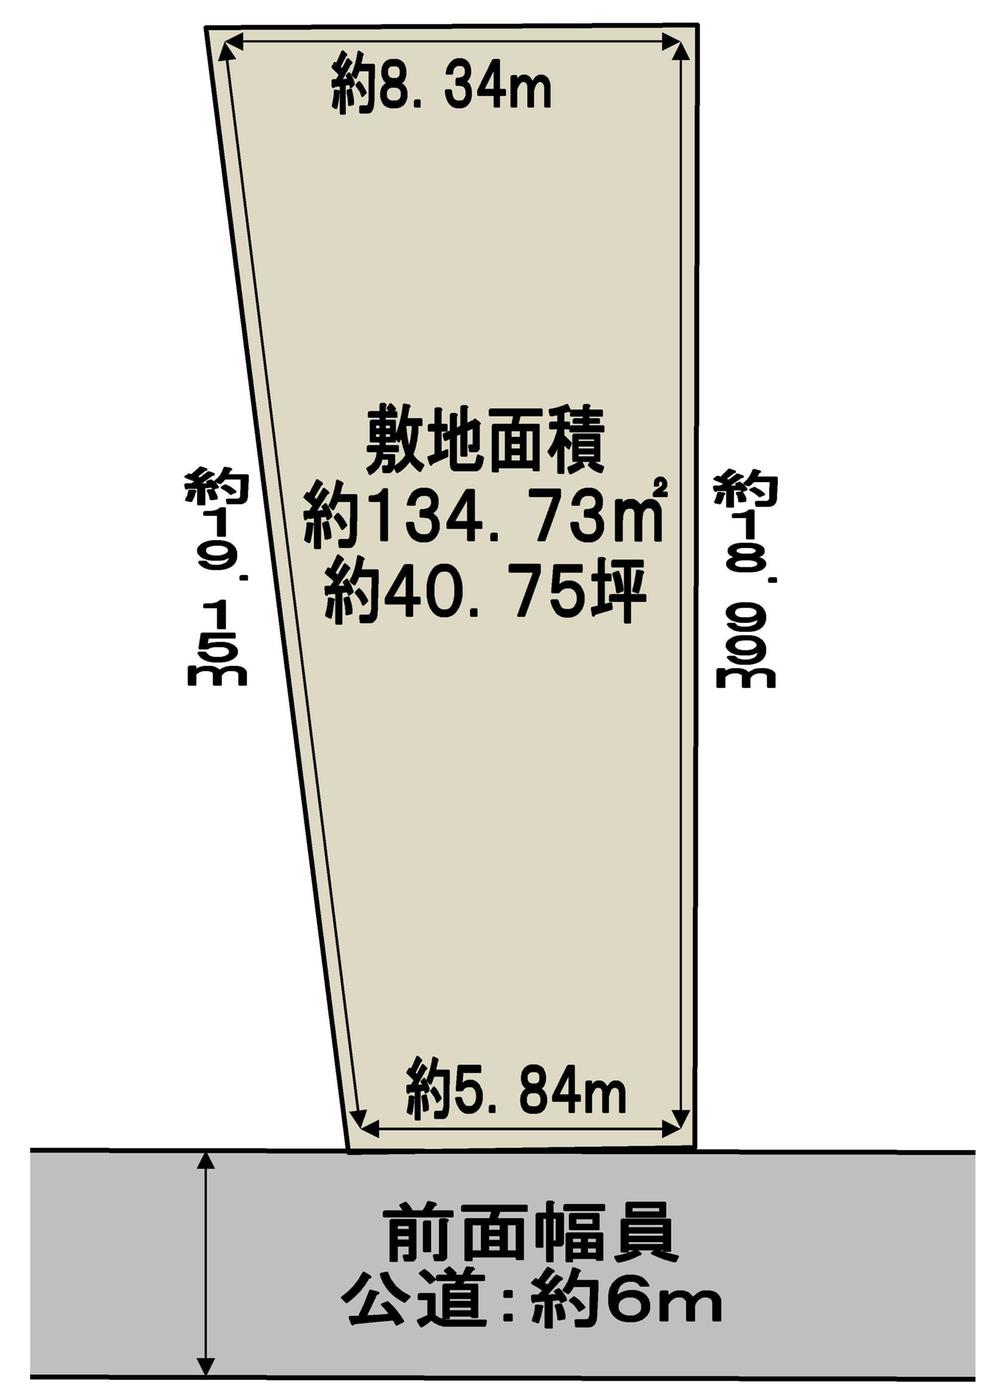 Compartment figure. Land price 28.8 million yen, Land area 134.73 sq m